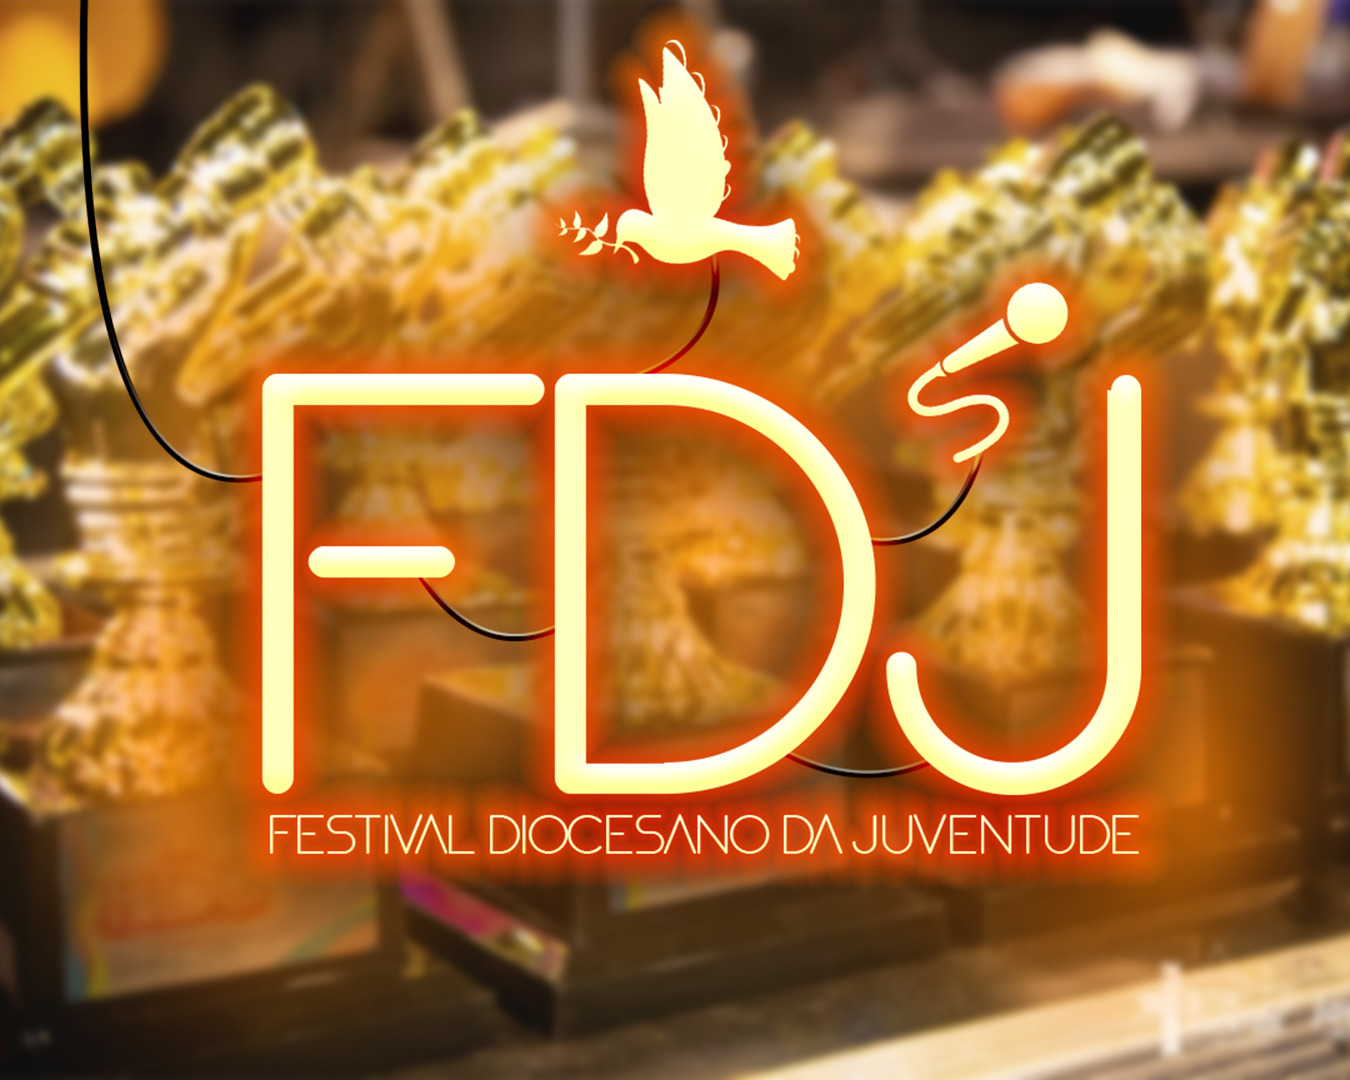 FDJ – Festival Diocesano da Juventude